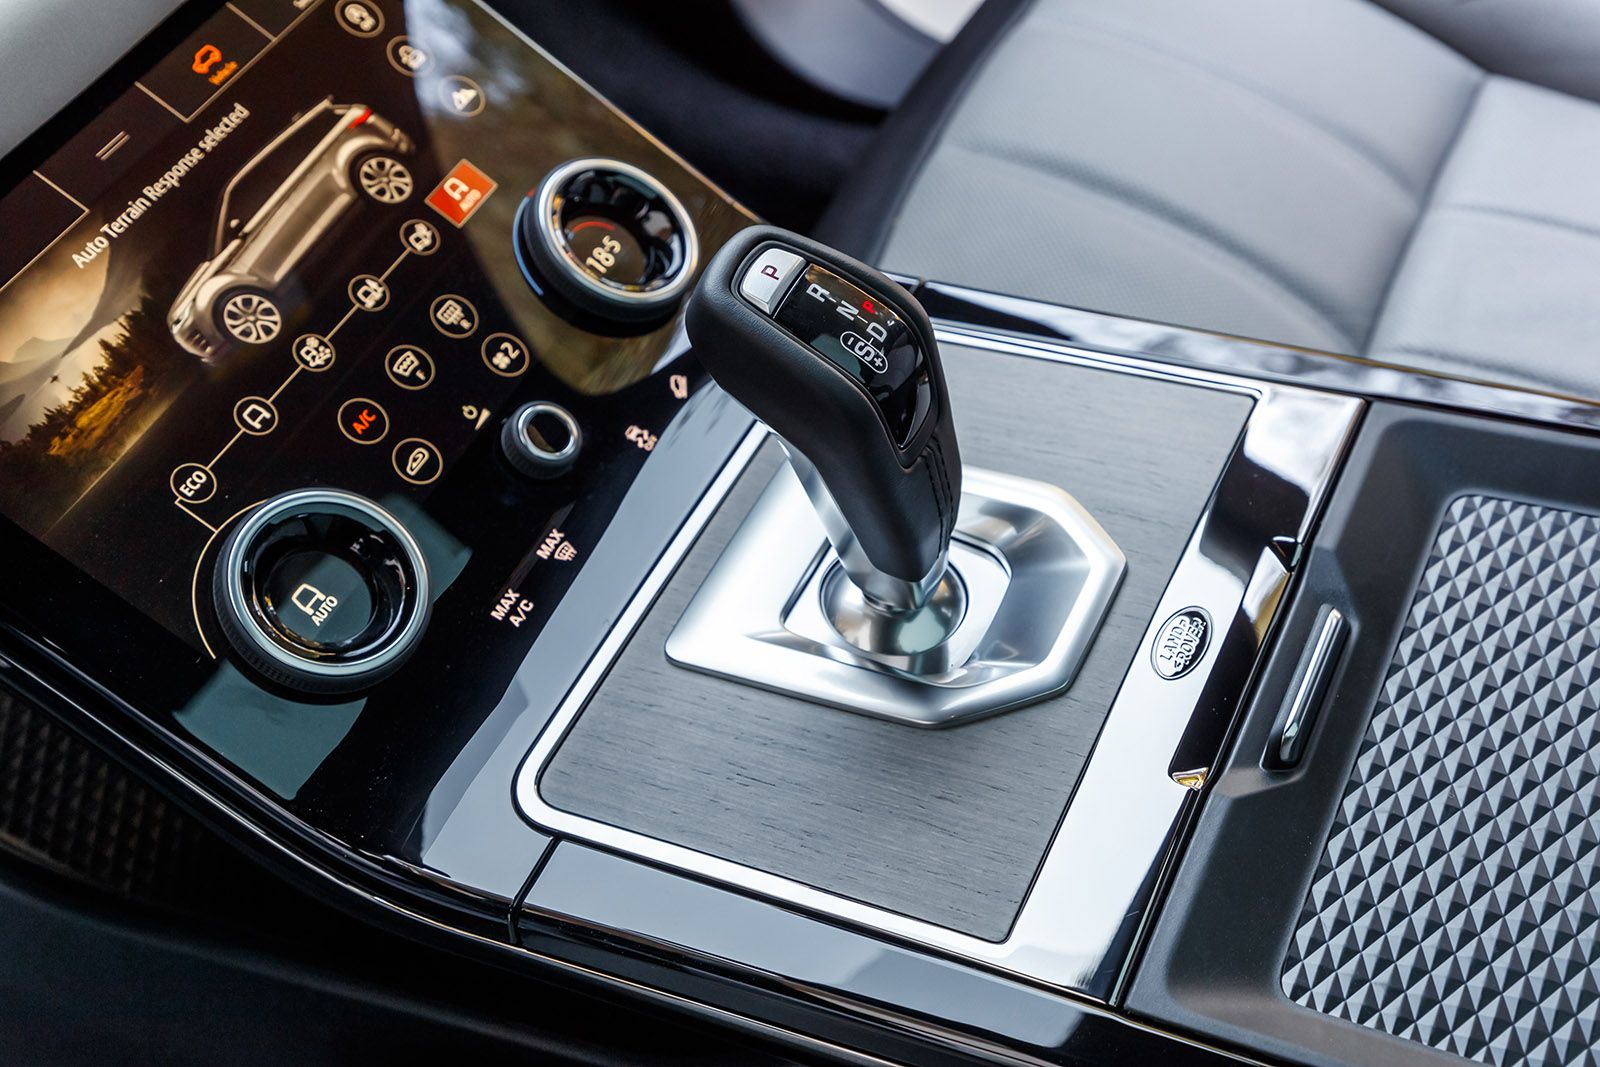 Range Rover Evoque Review interior image 3